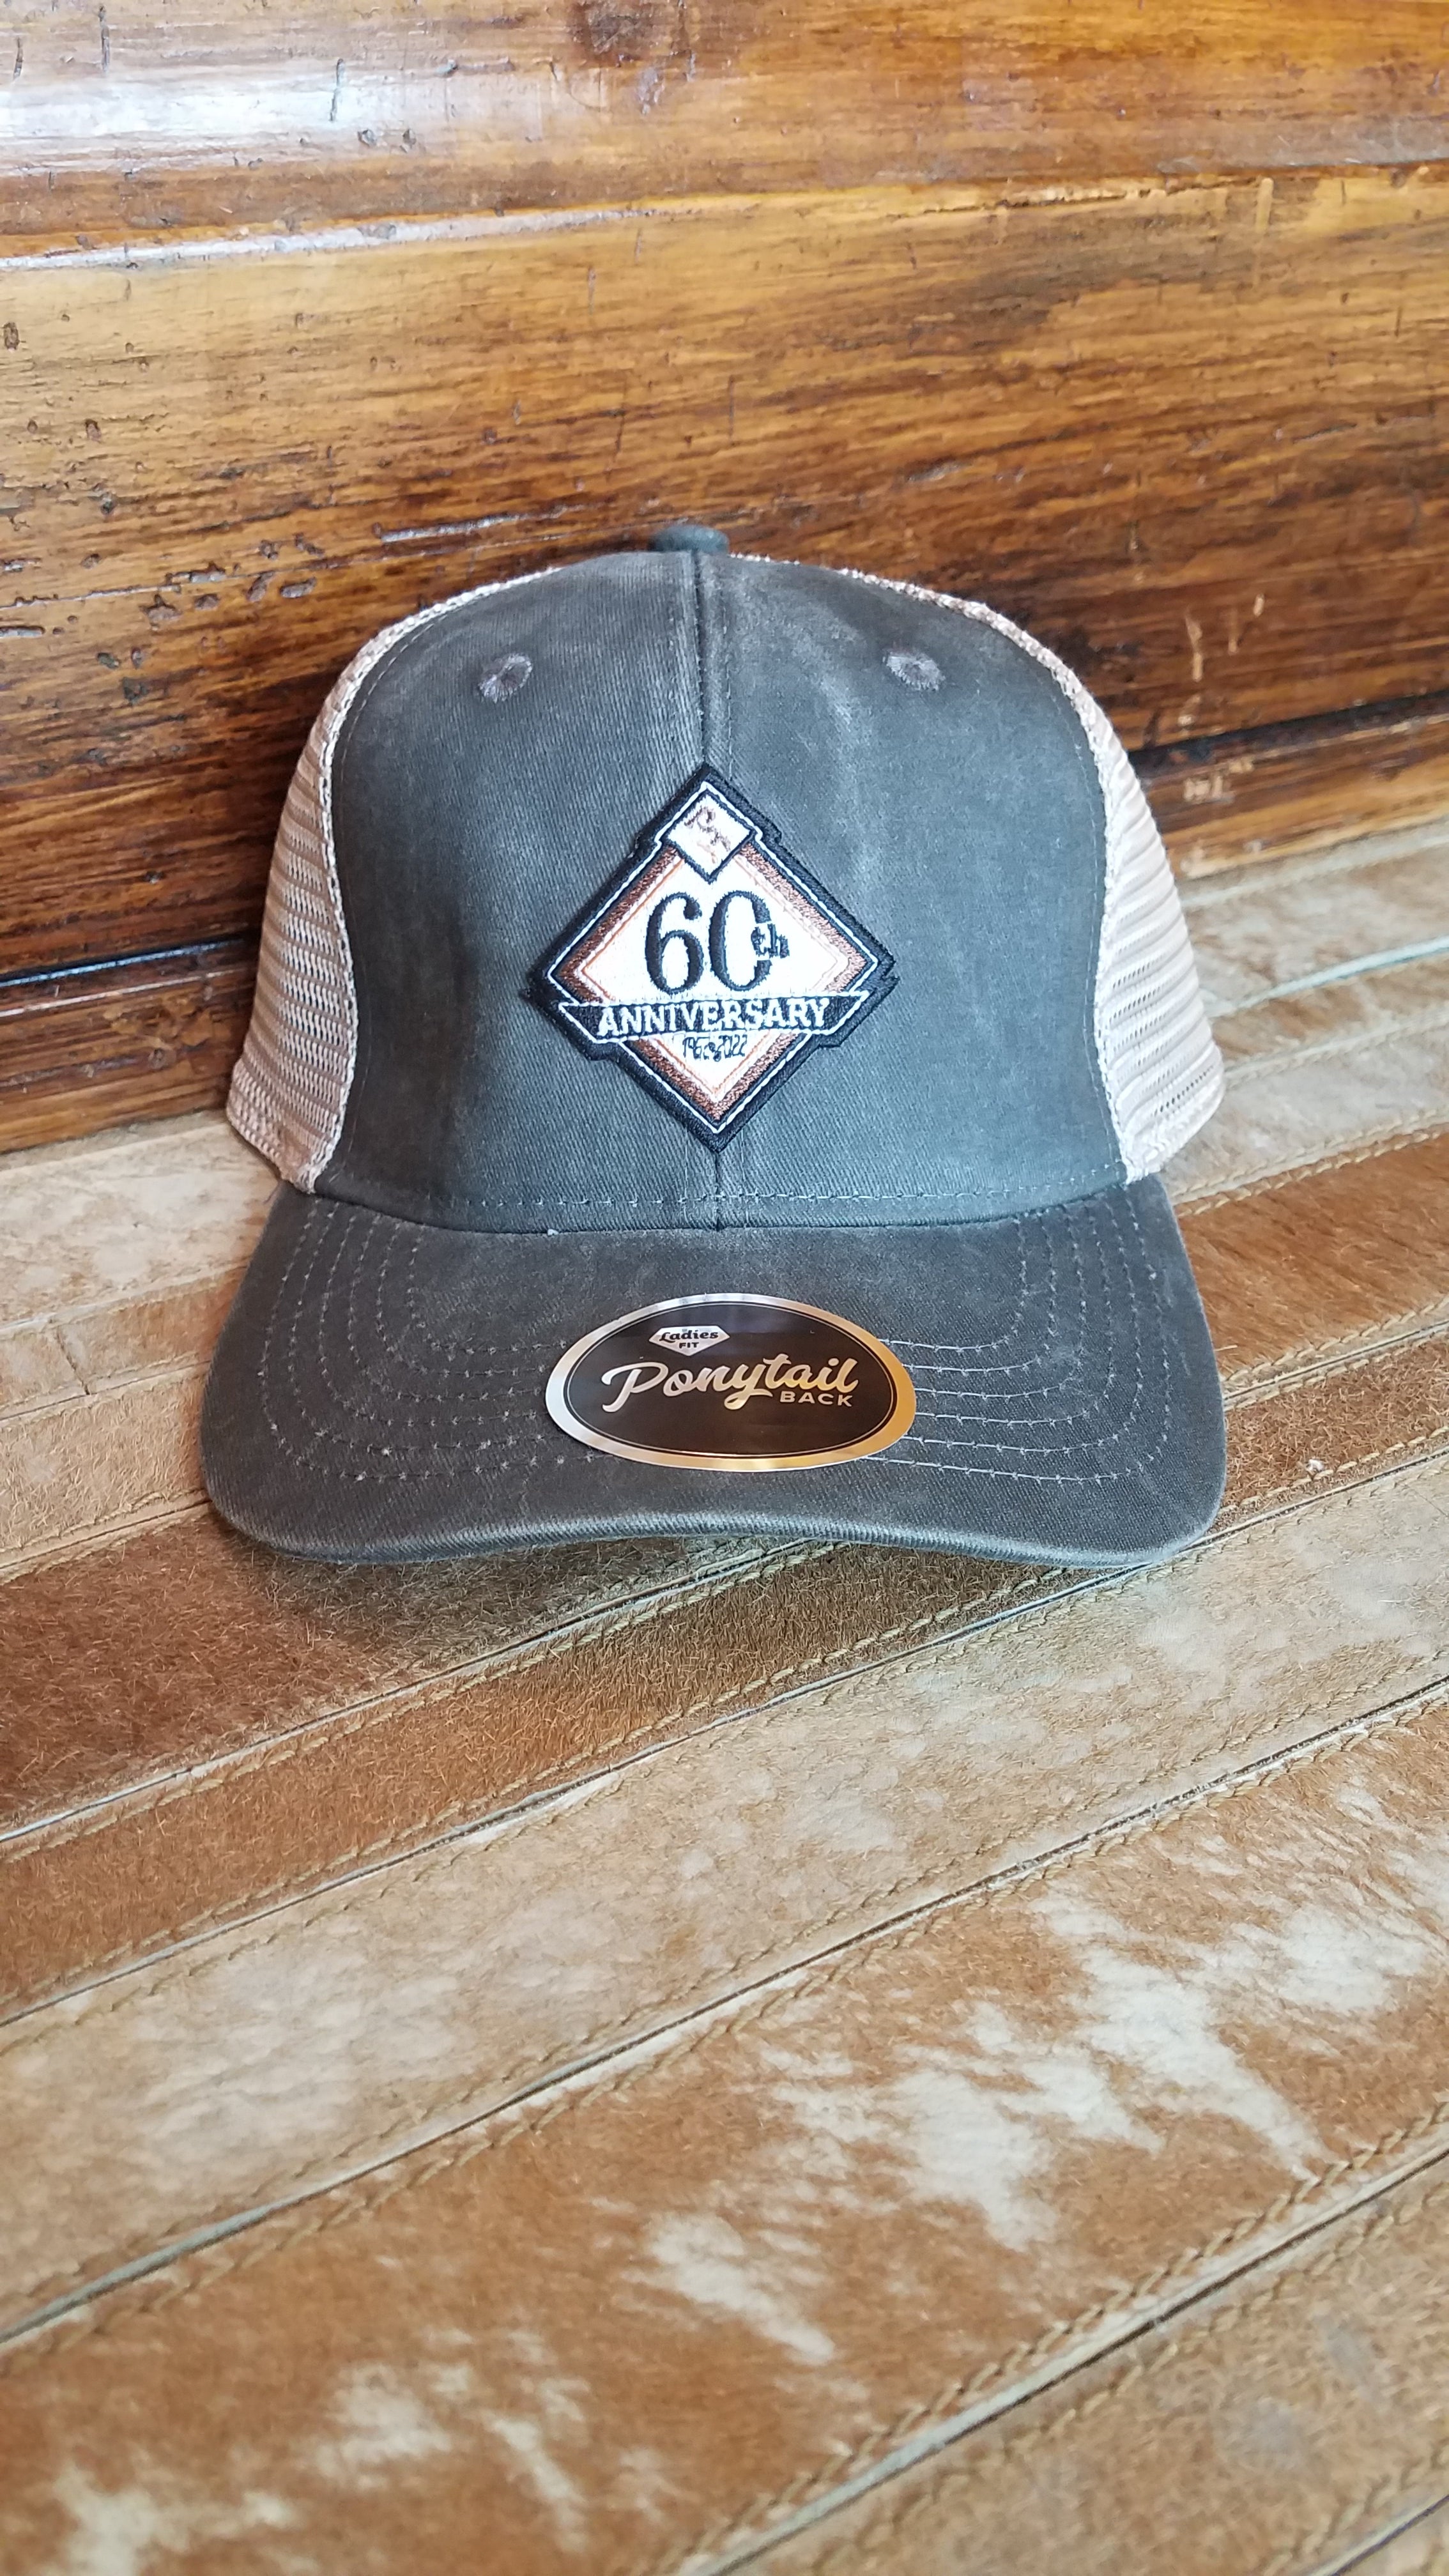 60th Anniversary Caps